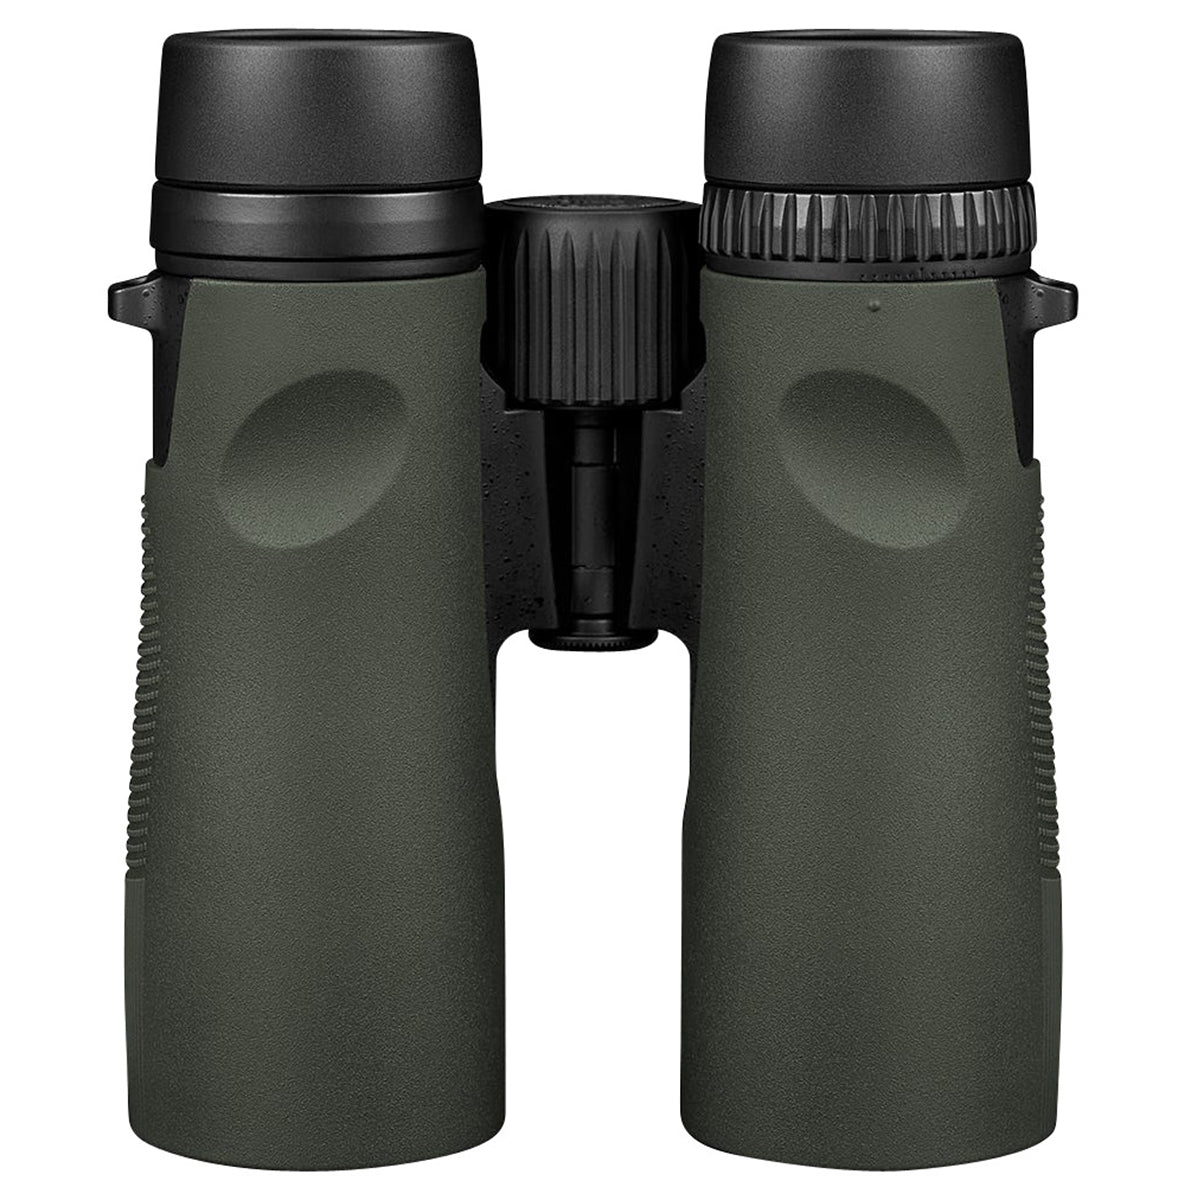 Vortex Diamondback HD 8x42 Binoculars in Vortex Diamondback HD 8x42 Binoculars by Vortex Optics | Optics - goHUNT Shop by GOHUNT | Vortex Optics - GOHUNT Shop